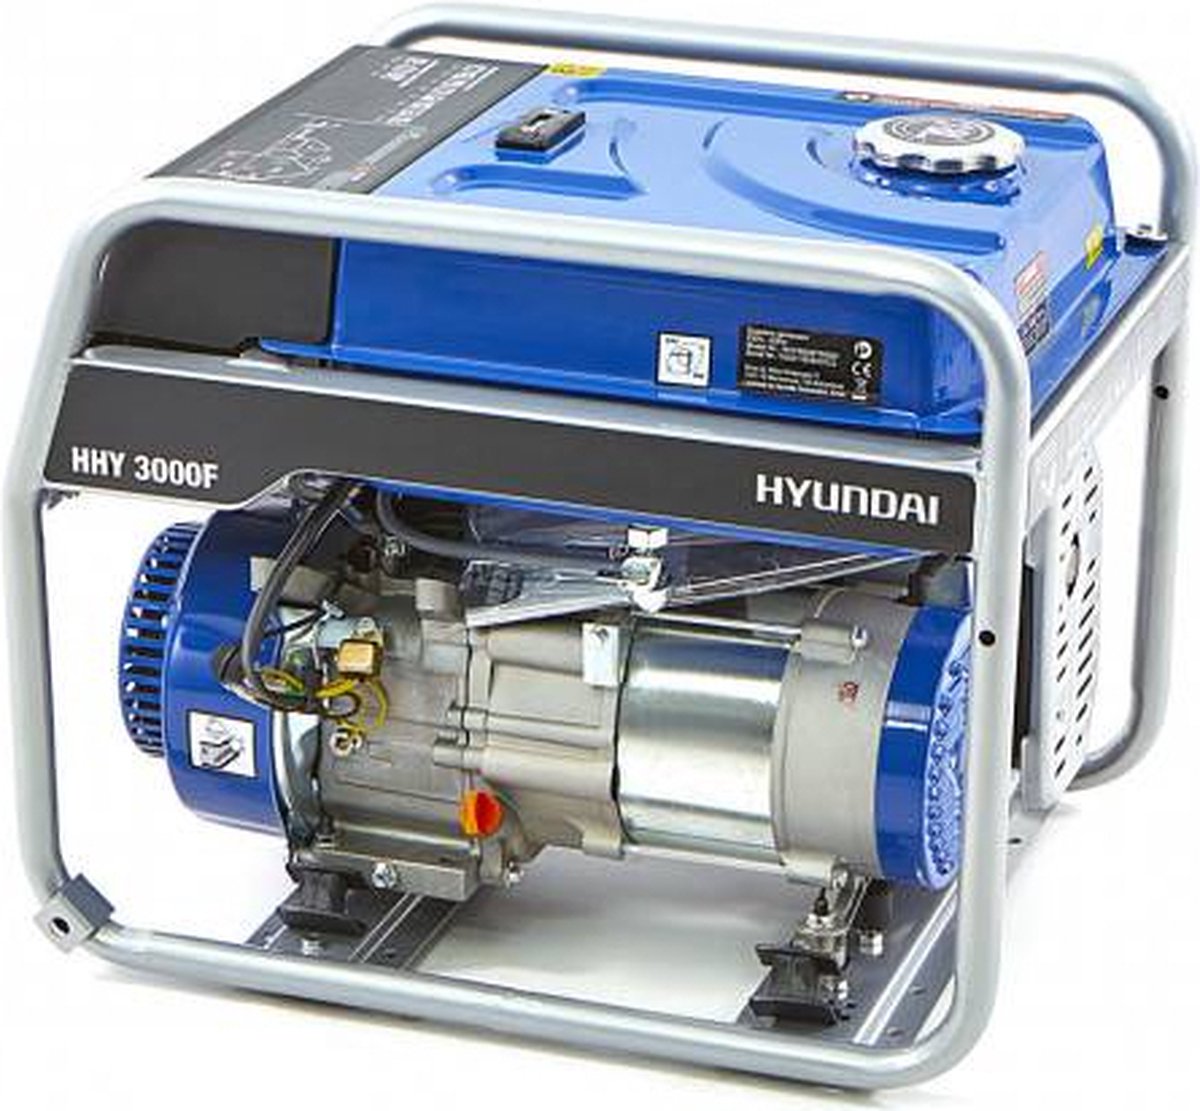 HYUNDAI aggregaat 2,6Kw 200cc OHV-benzinemotor | bol.com